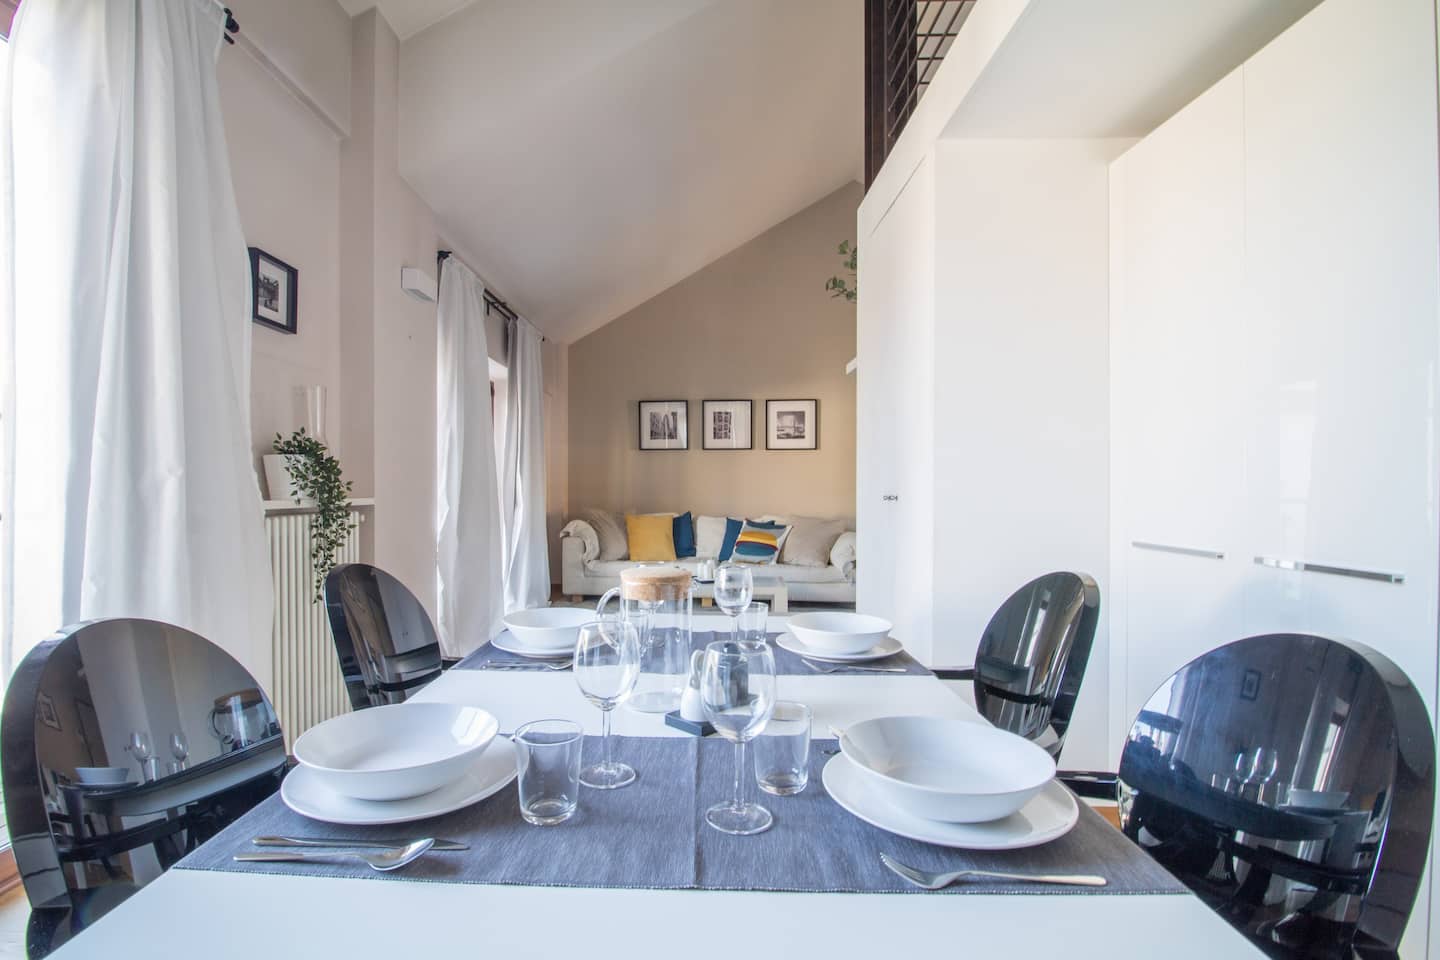 Dining table set in the kitchen of La La Land House, Vayadù flat in Genola